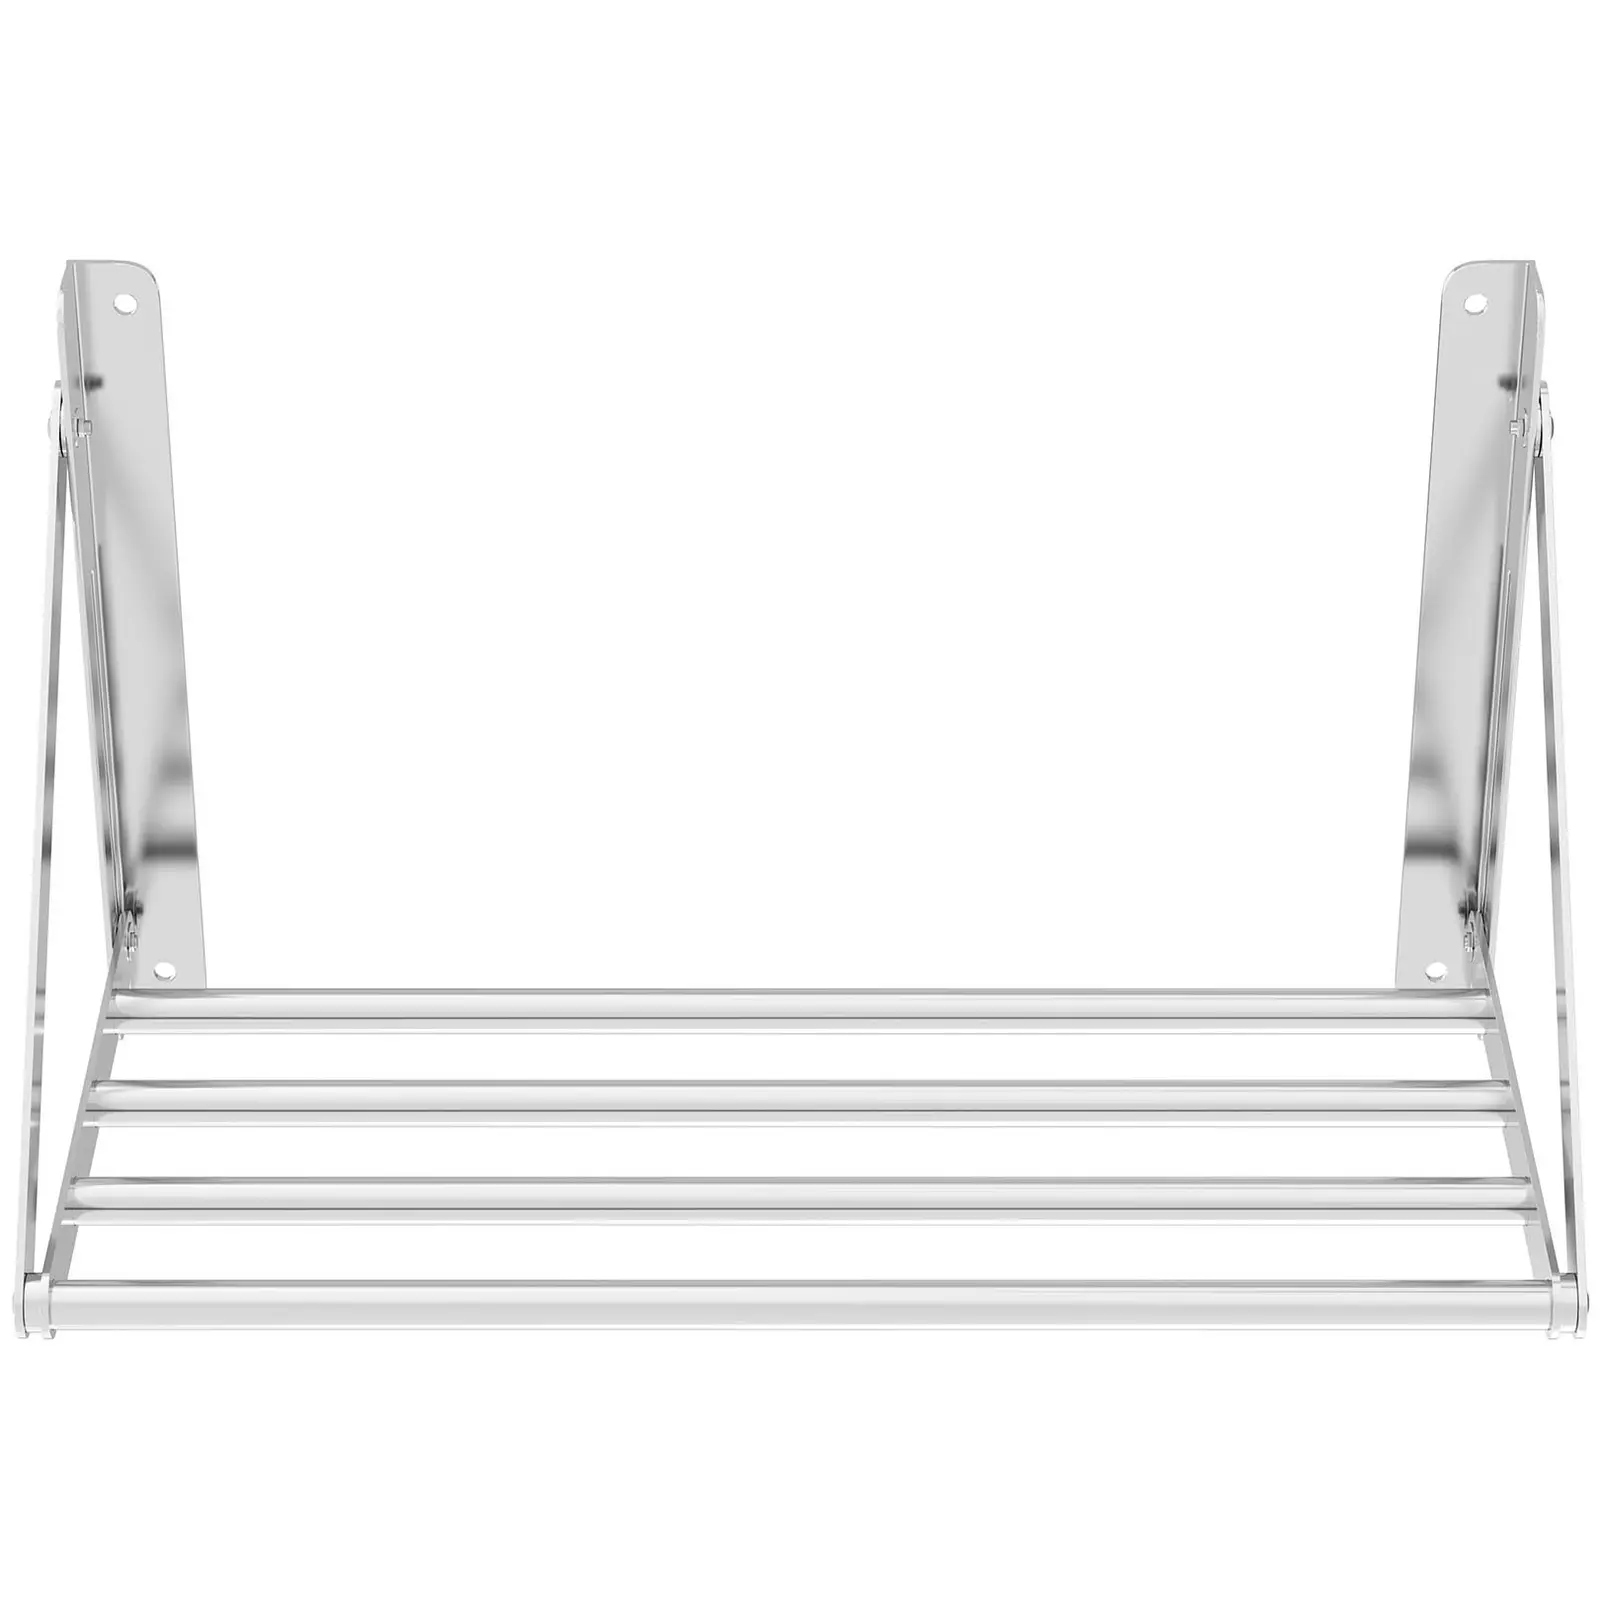 Wall Shelf - folding - tube style - 60 x 30 cm - 40 kg - stainless steel